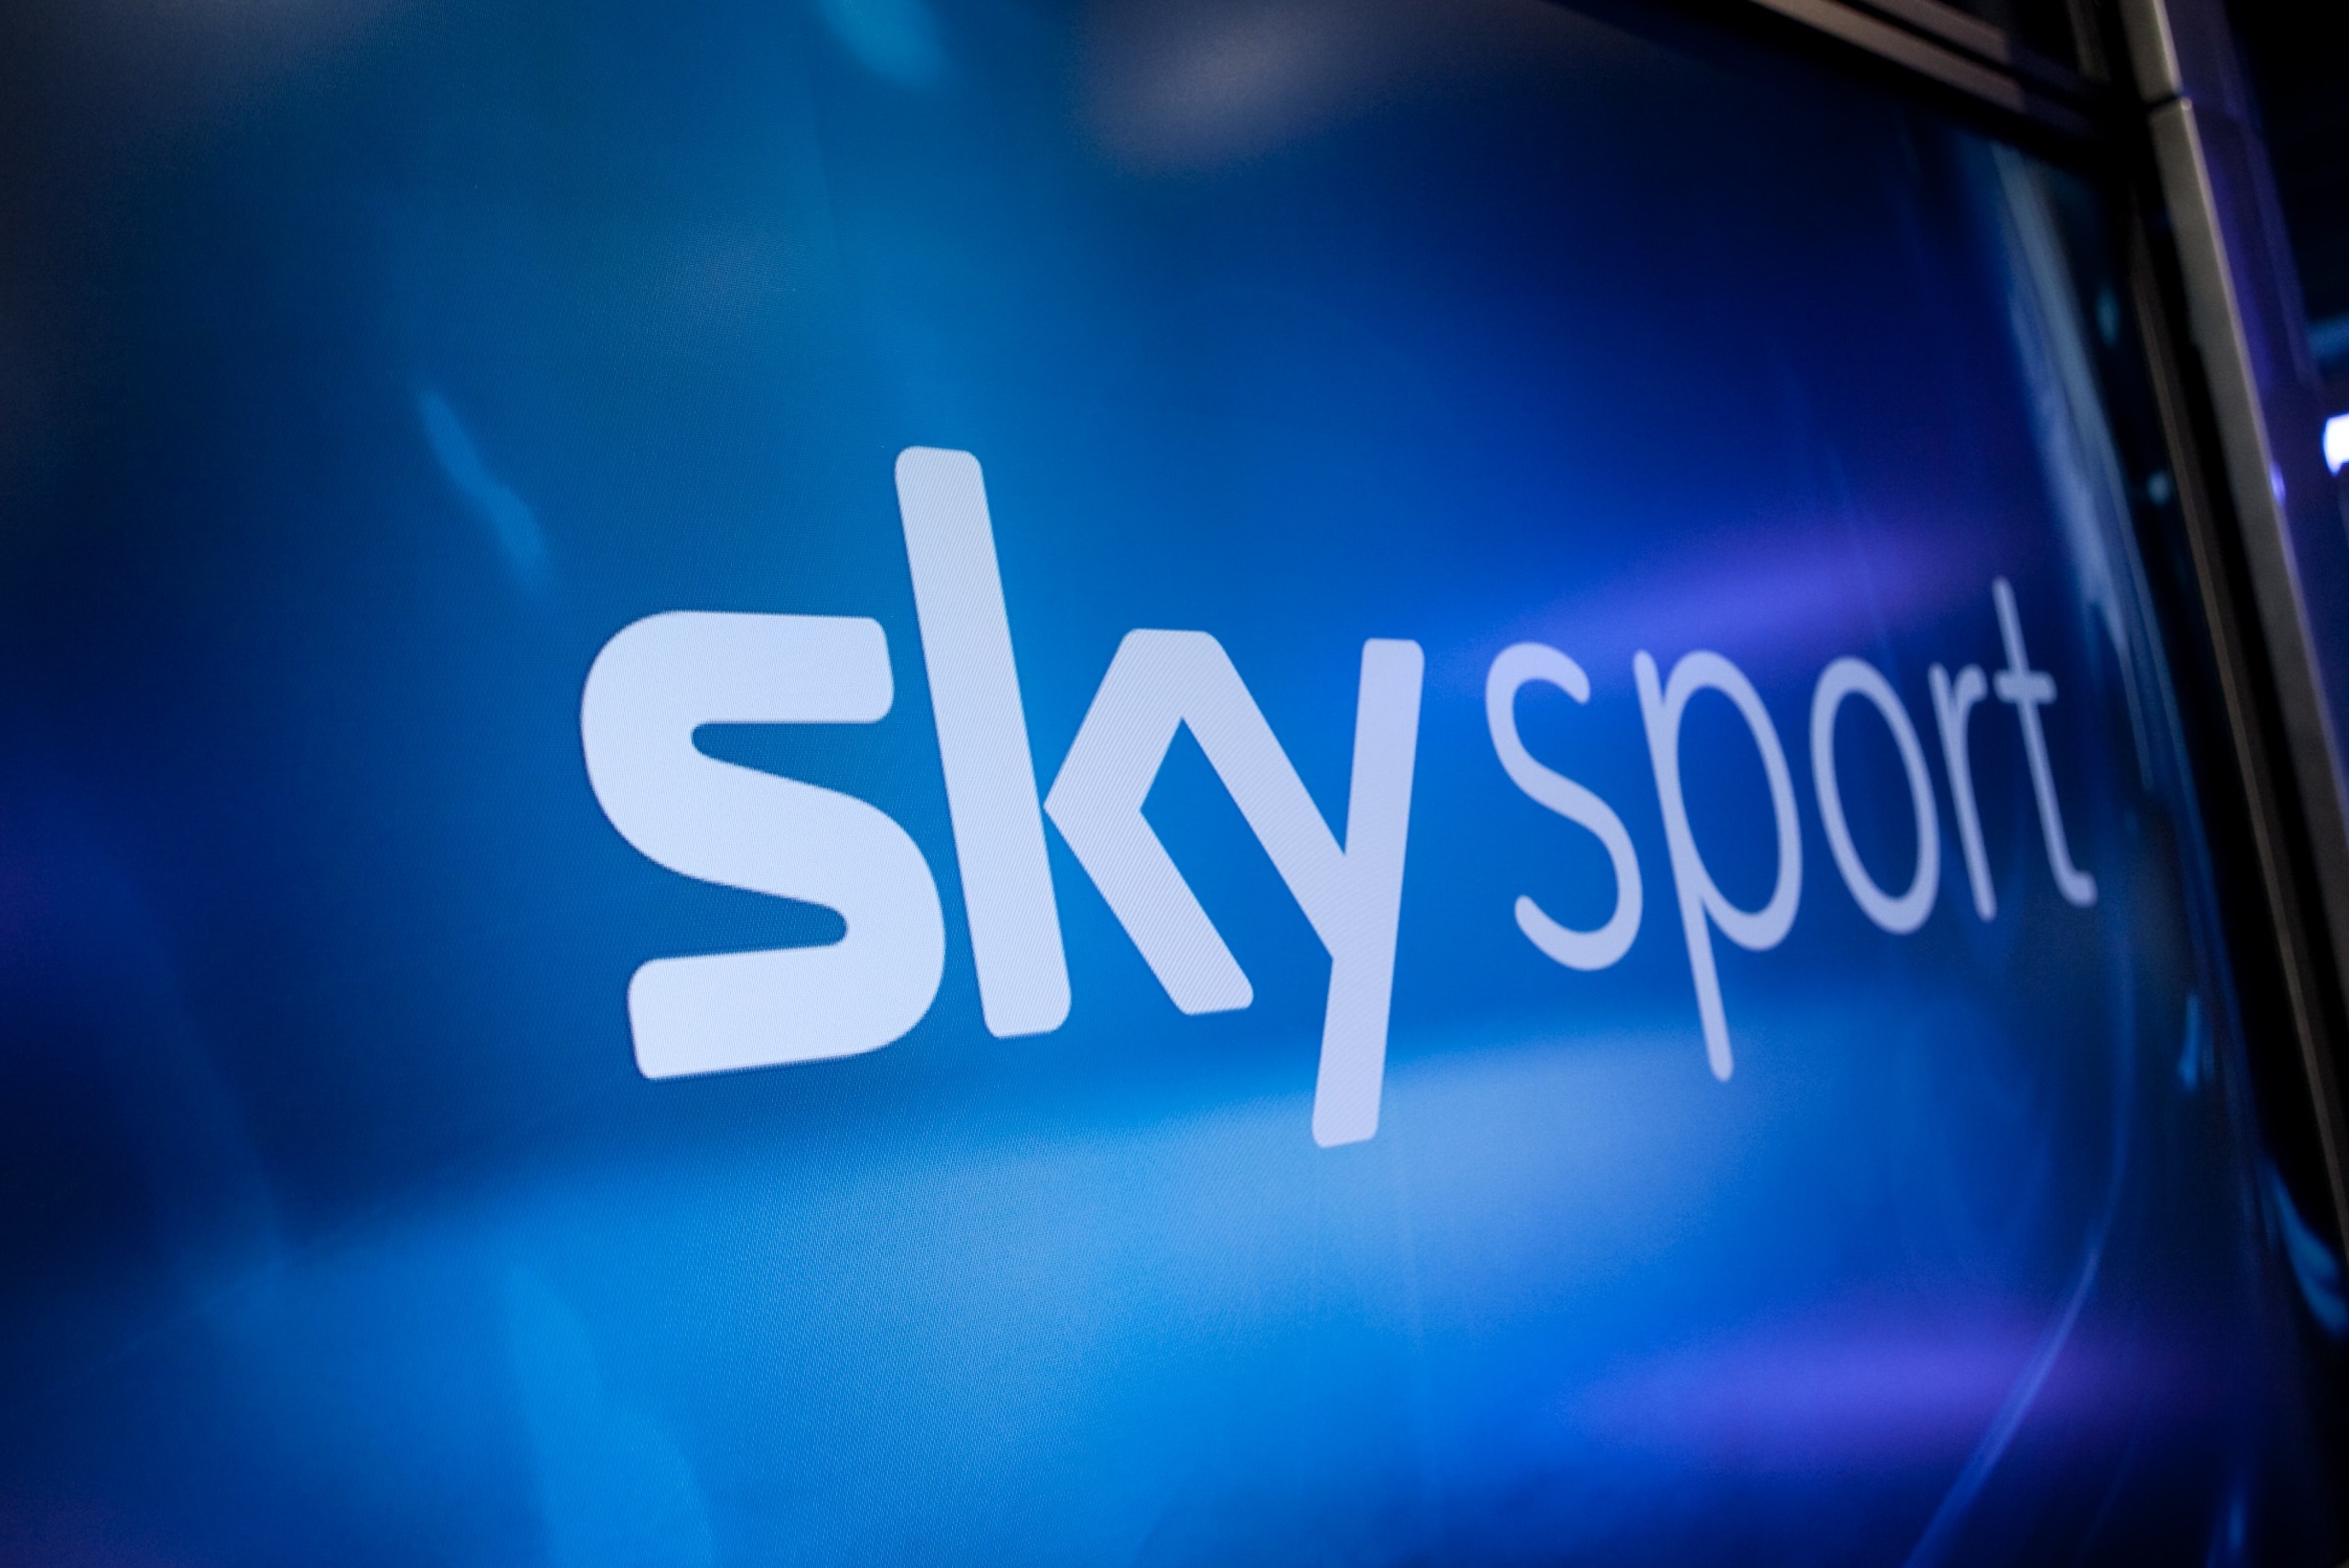 Ofcom launches pay TV consultation into Sky Sports - Digital TV Europe